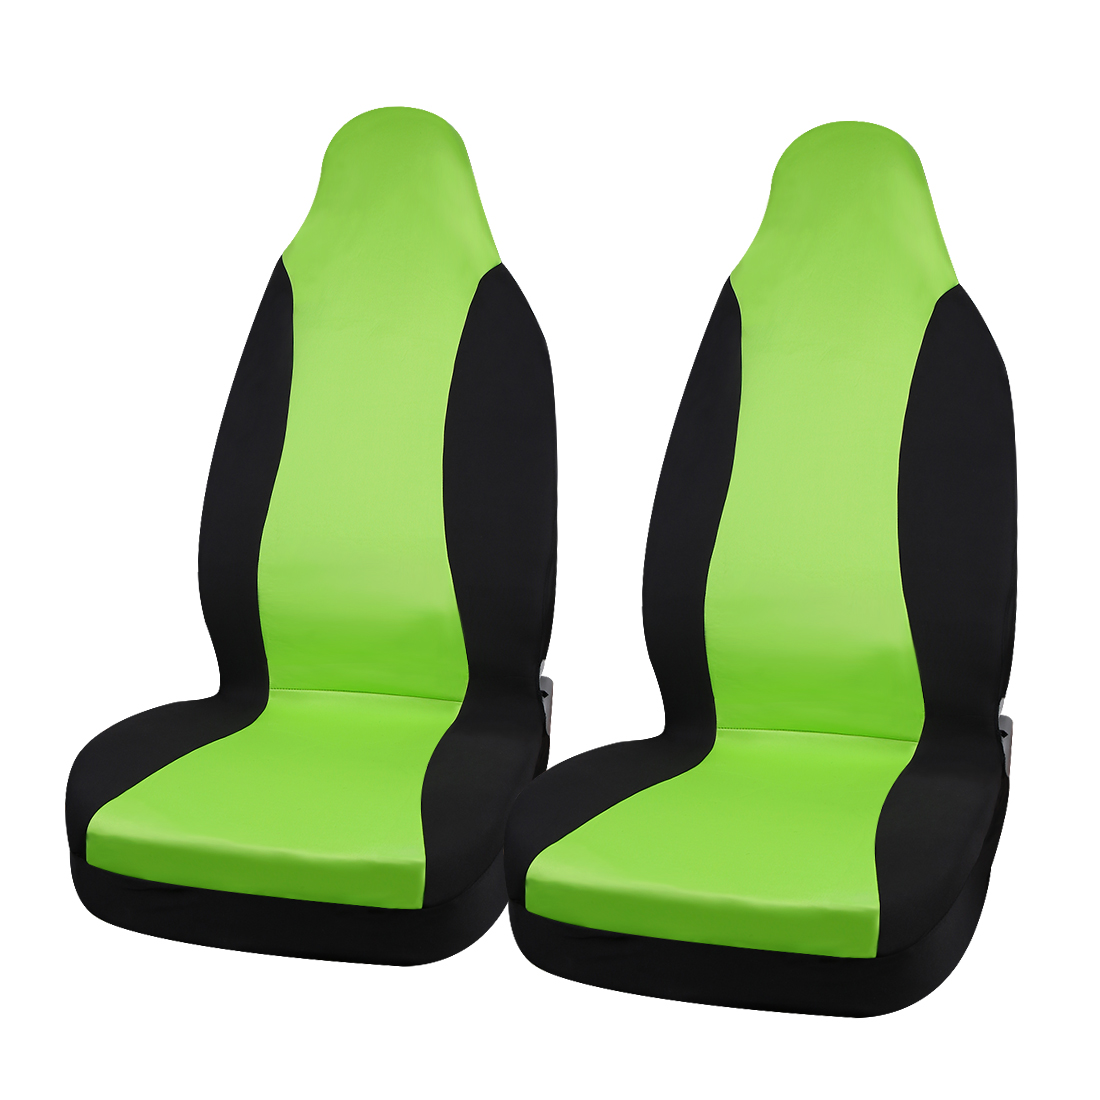 Green Black Automotive Universal Bucket Car Seat Cover Pair | eBay